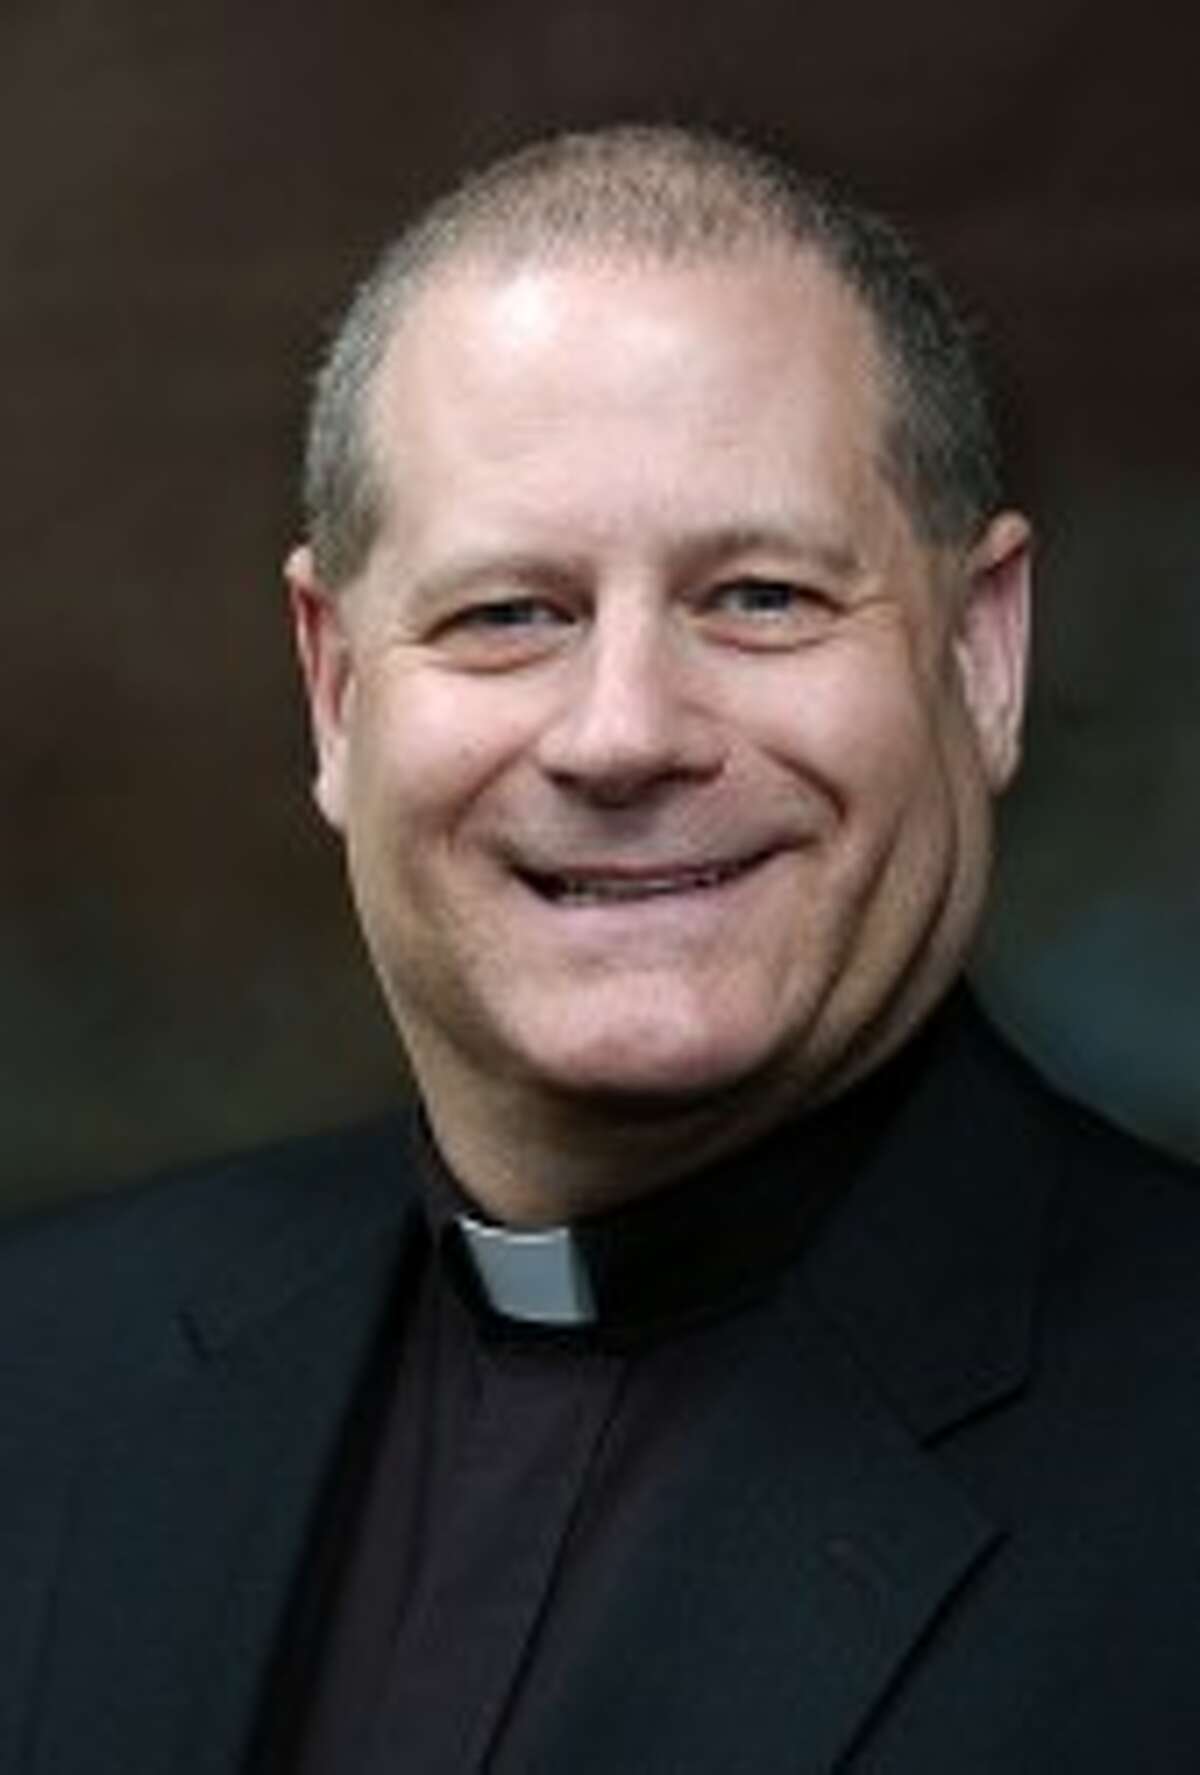 Father Michael Burt